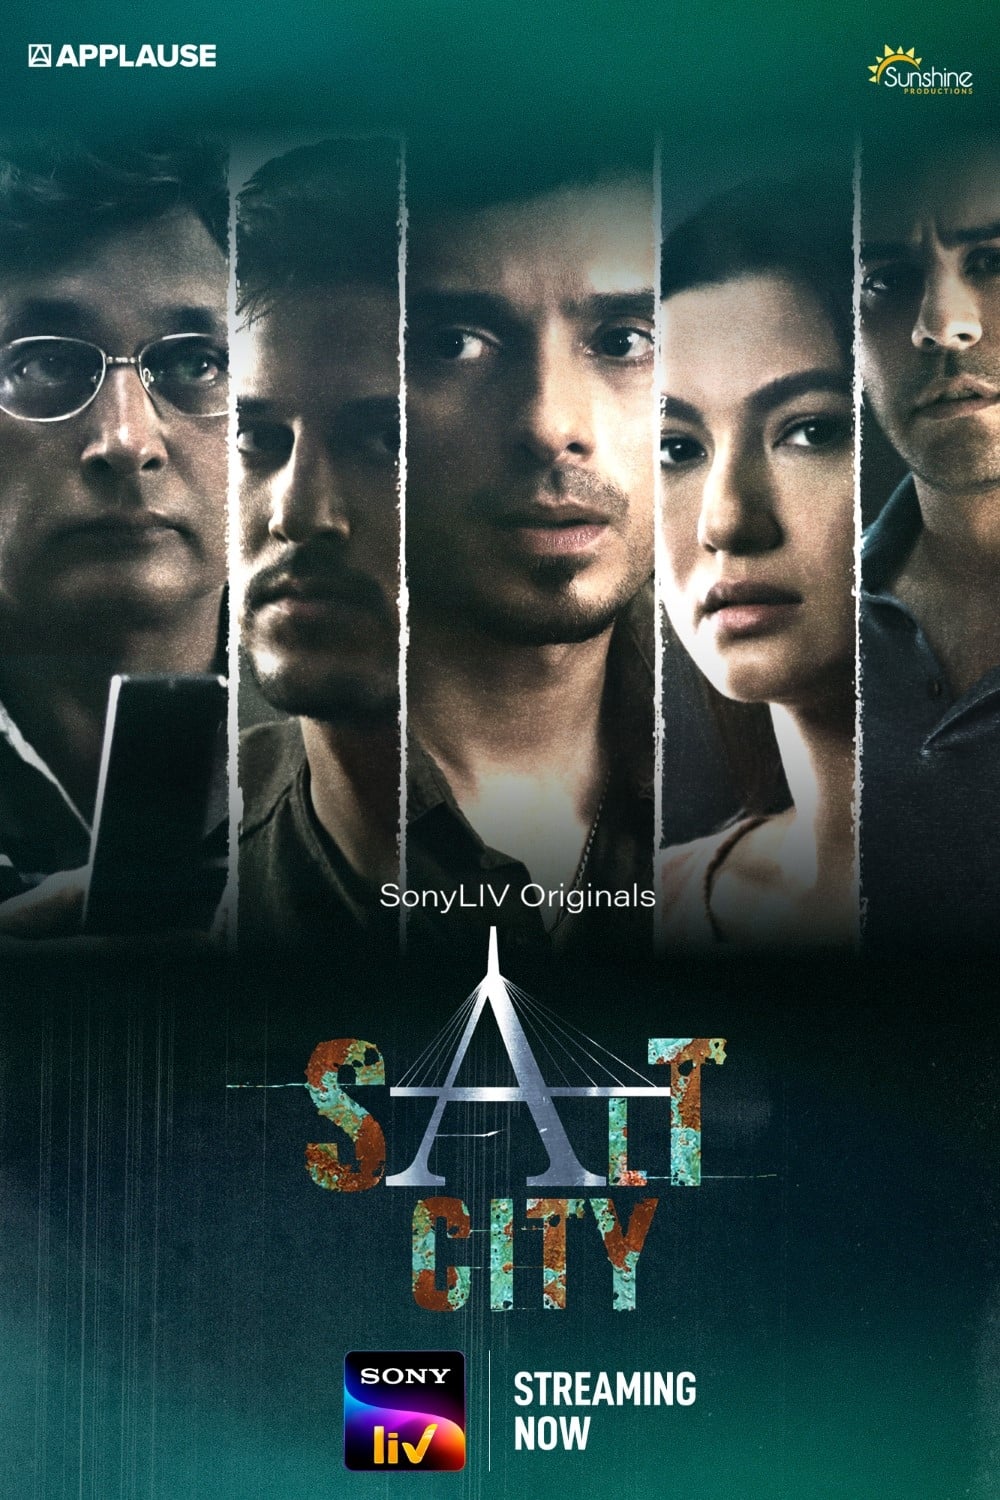 Salt City (2022) Hindi Season 1